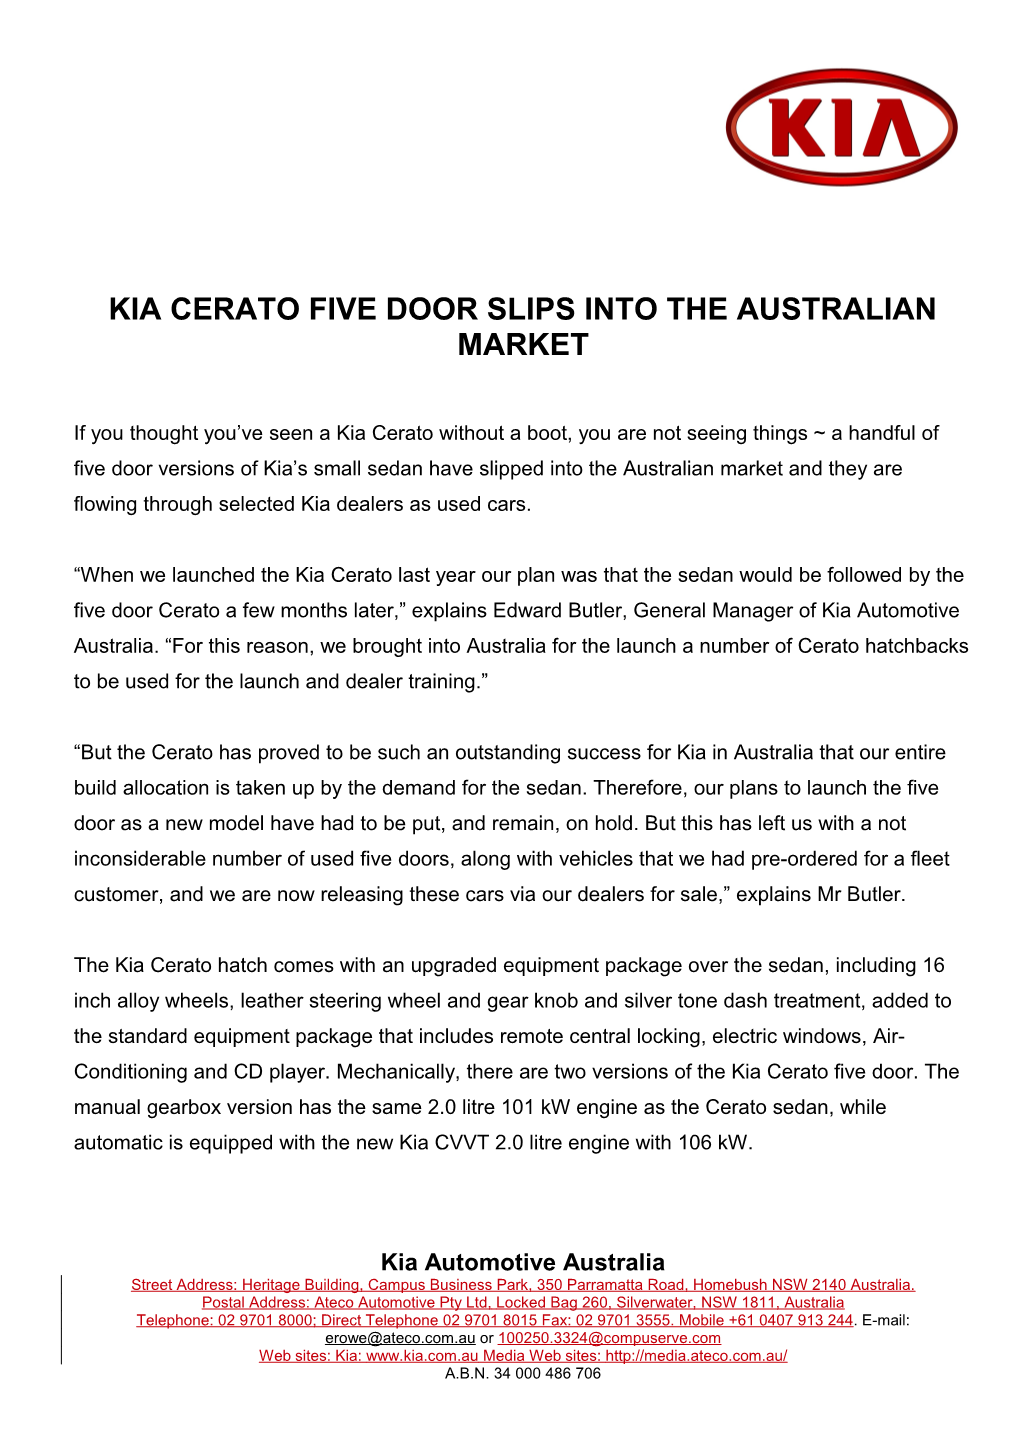 Kia Cerato Five Door Slips Into the Australian Market